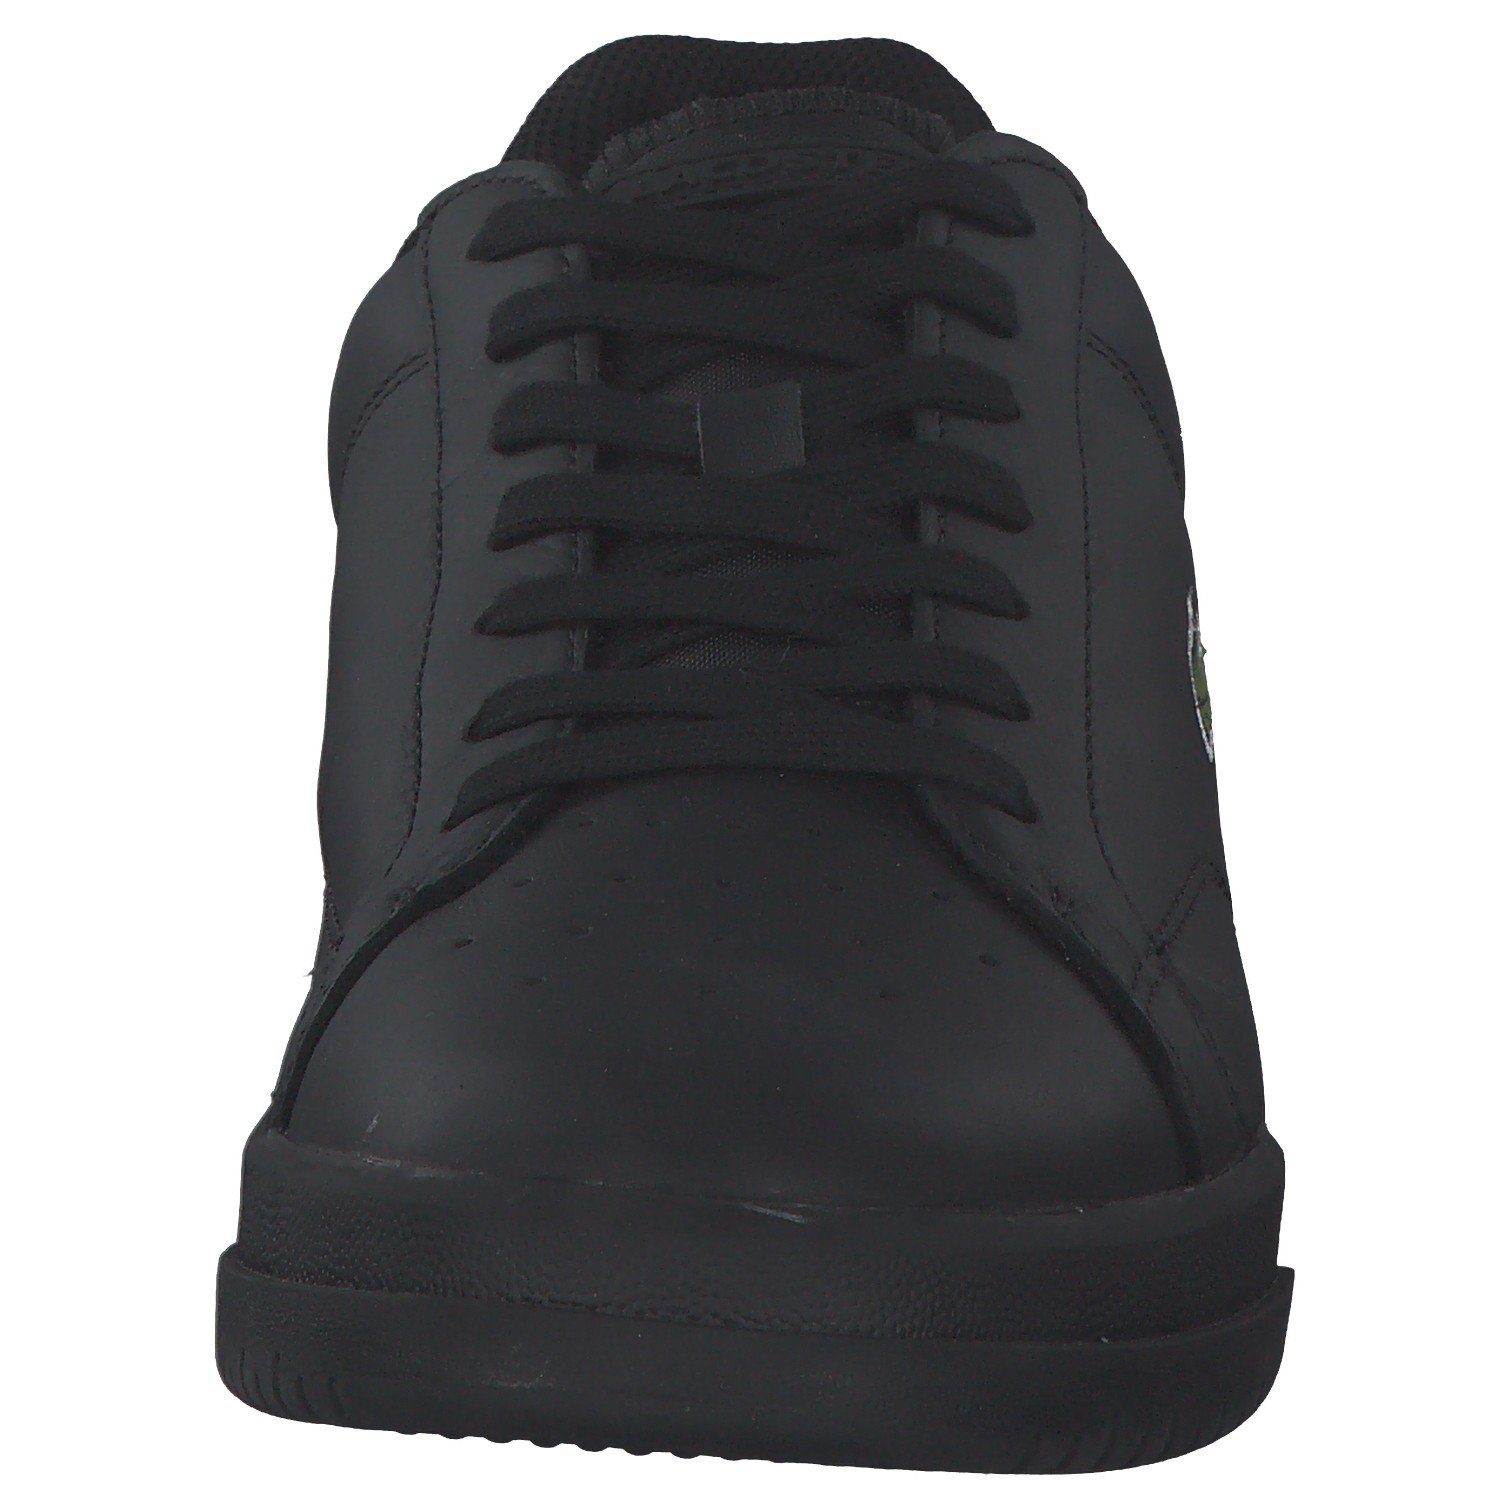 Lacoste Twin Sneaker black/black Lacoste (12601118) 41SMA0018 Serve